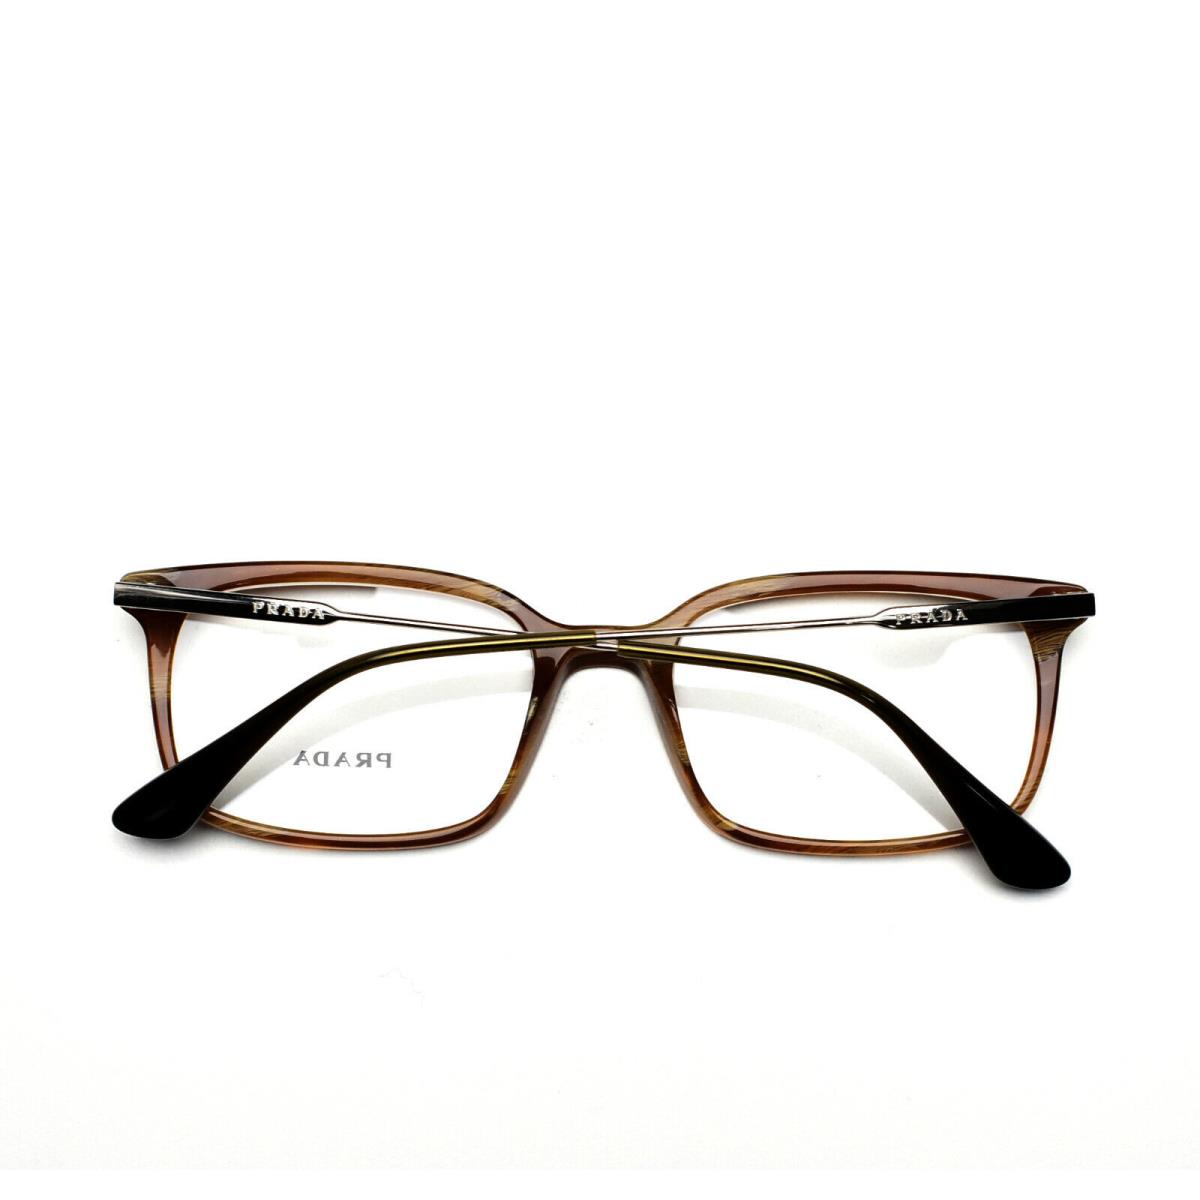 Prada Eyeglasses Frame Brown Havana 16U Fhx 53-19-145 no Case